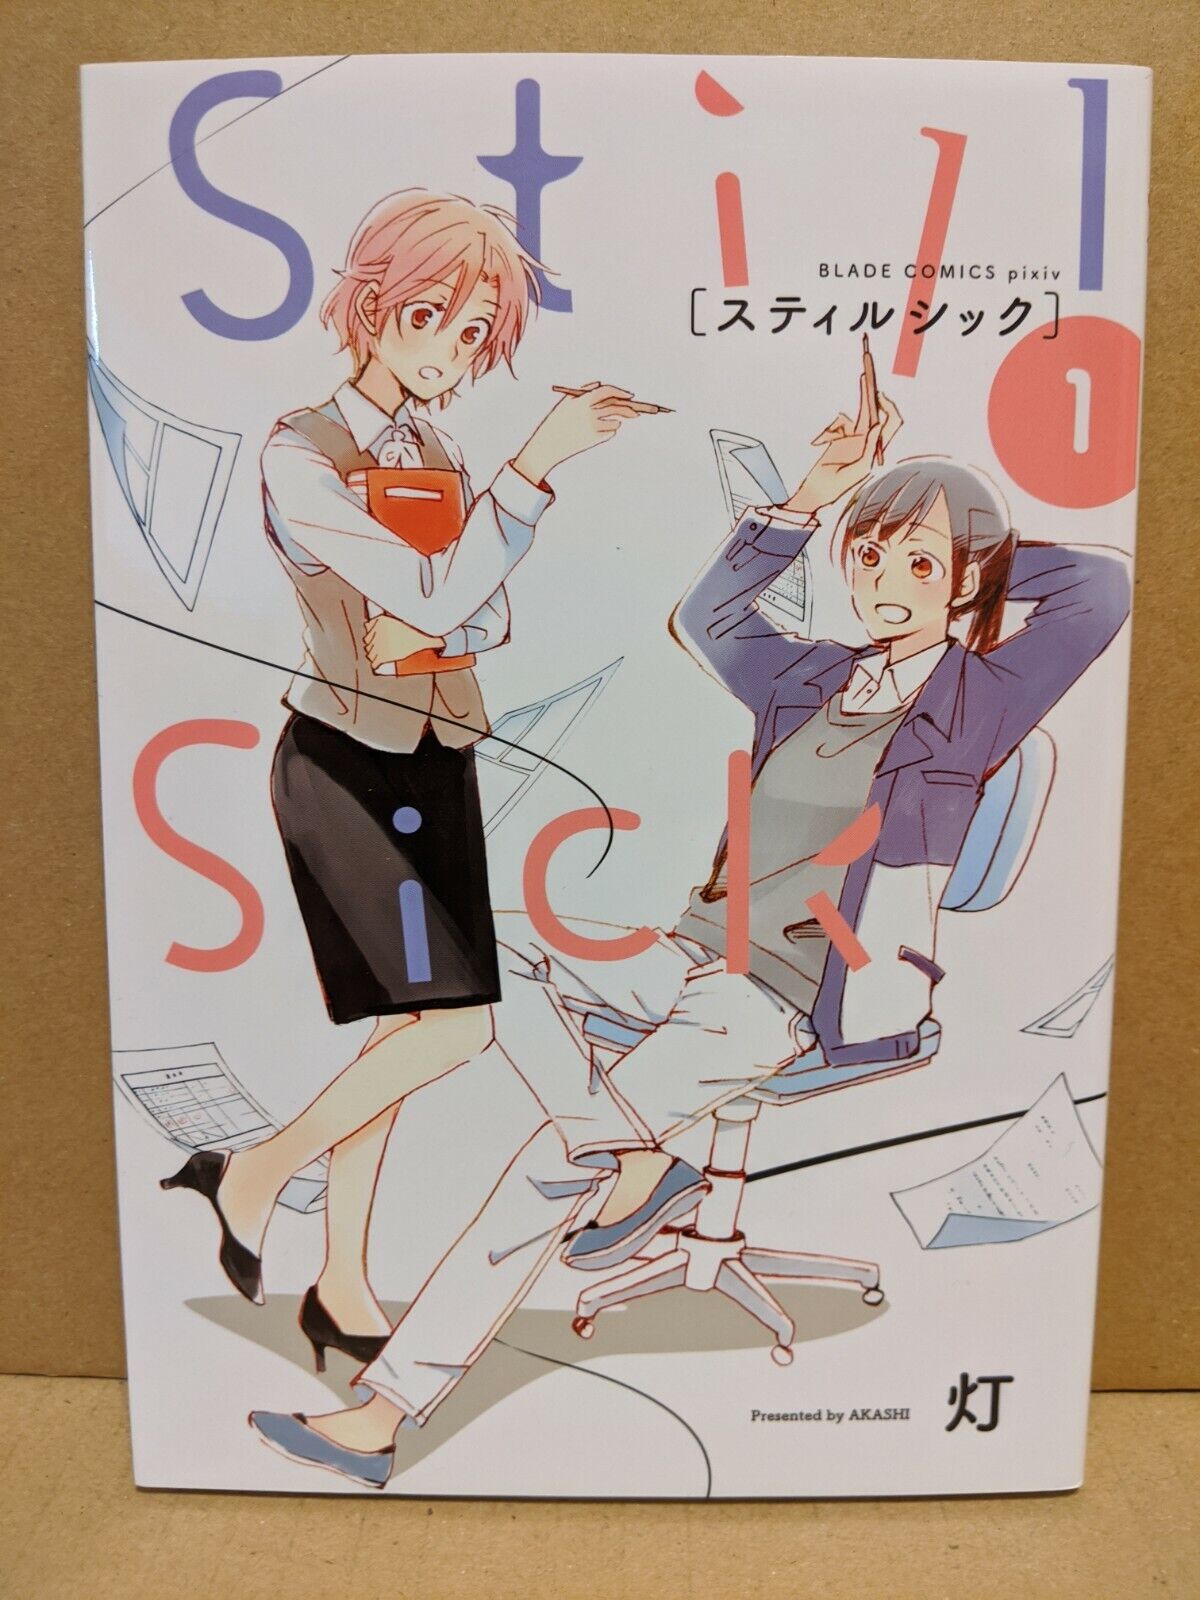 Still Sick Vol. 1 NEW Akashi Japanese Manga Yuri